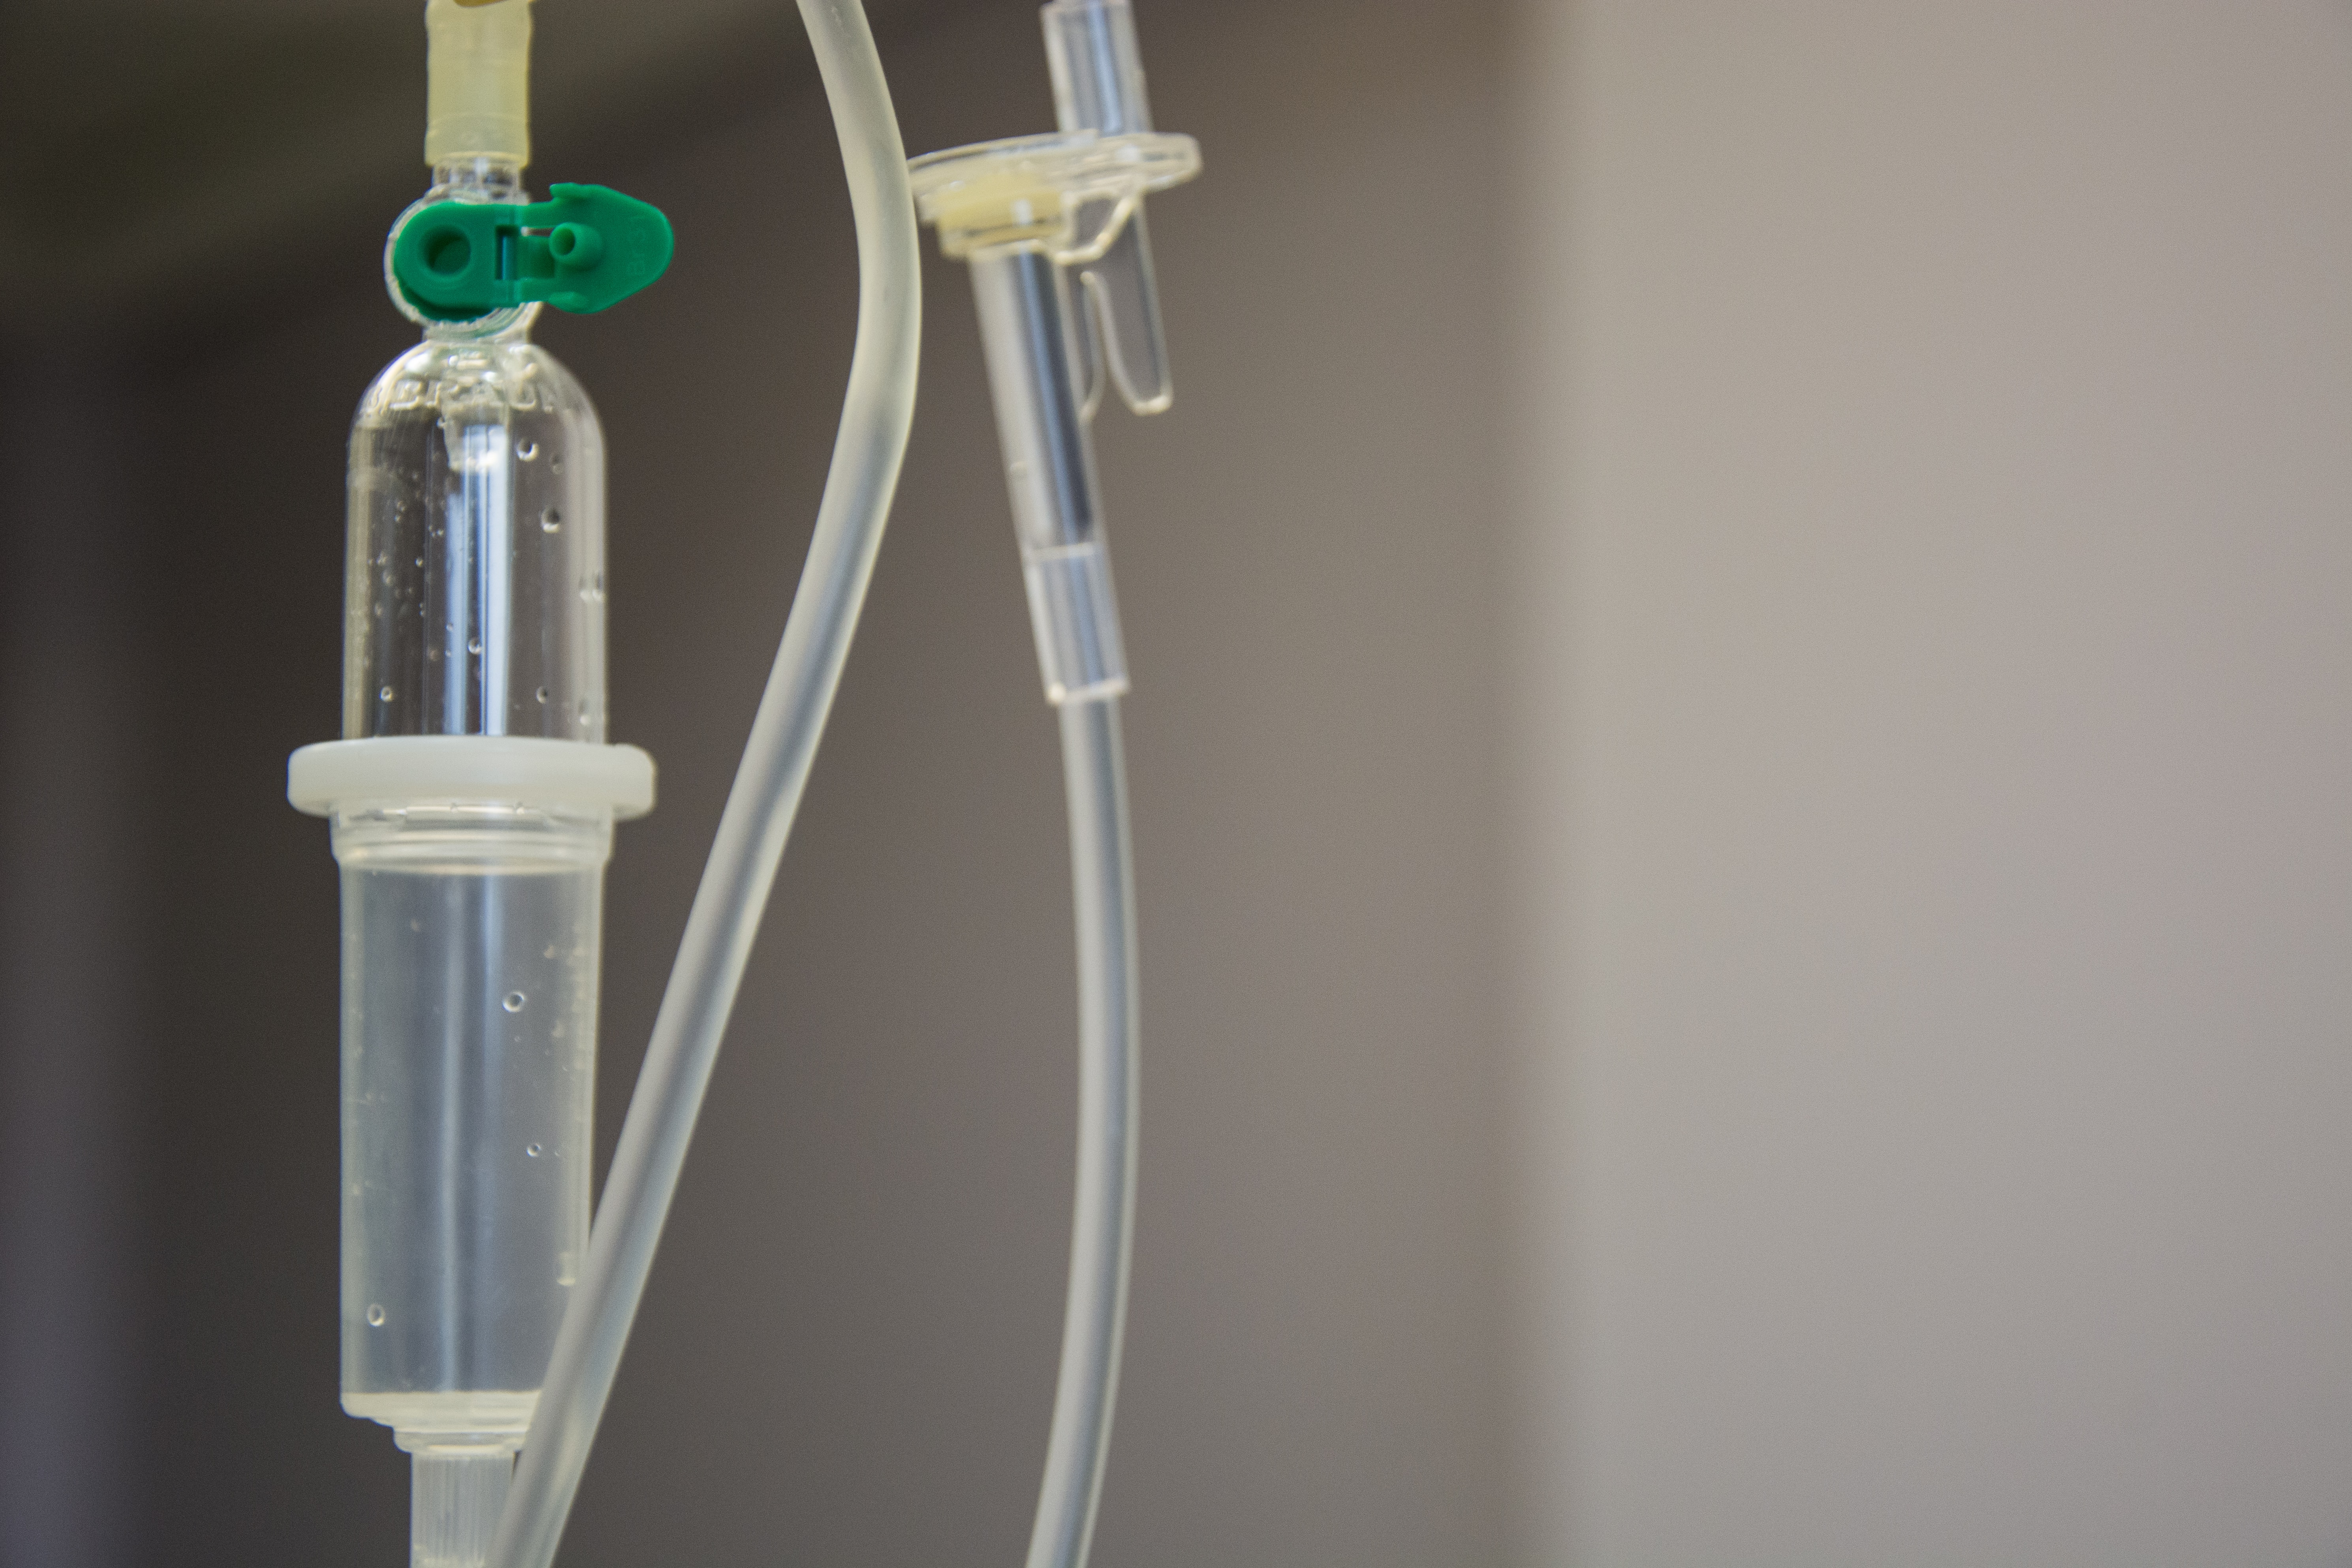 IV fluid drip in a hospital